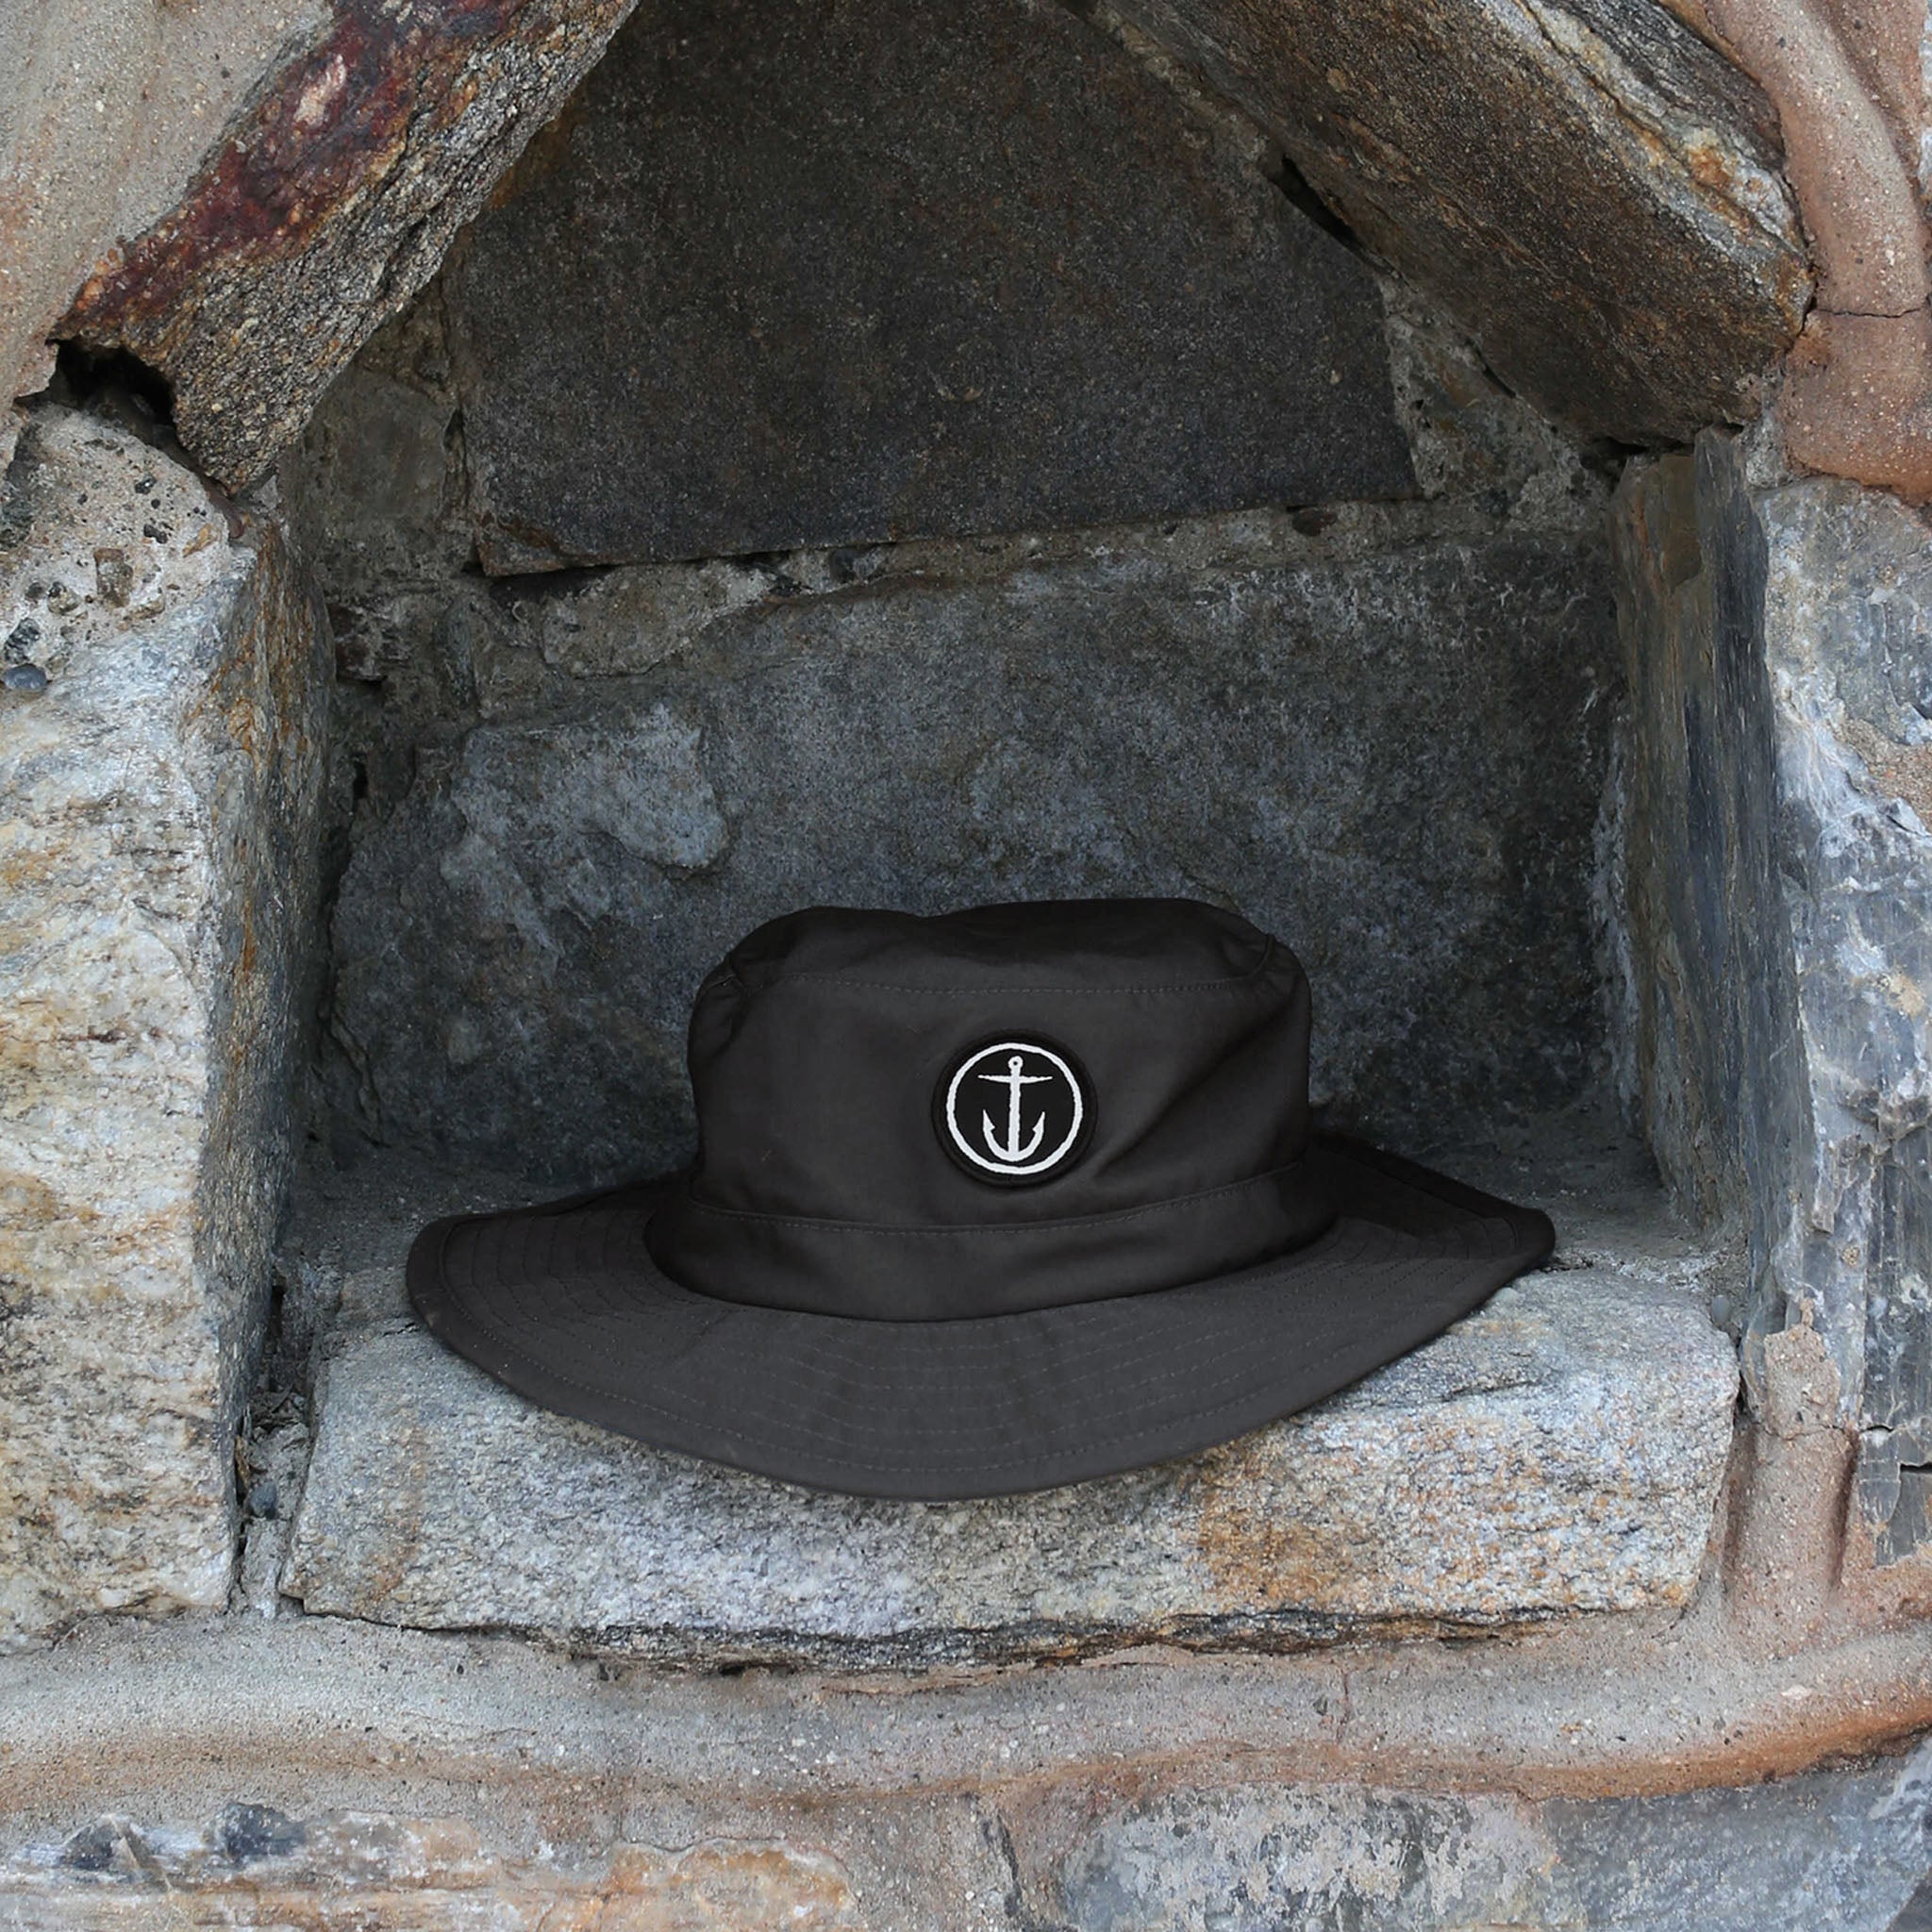 Captain Fin Boony Tunes Hat, Color: Black, Size: S/M